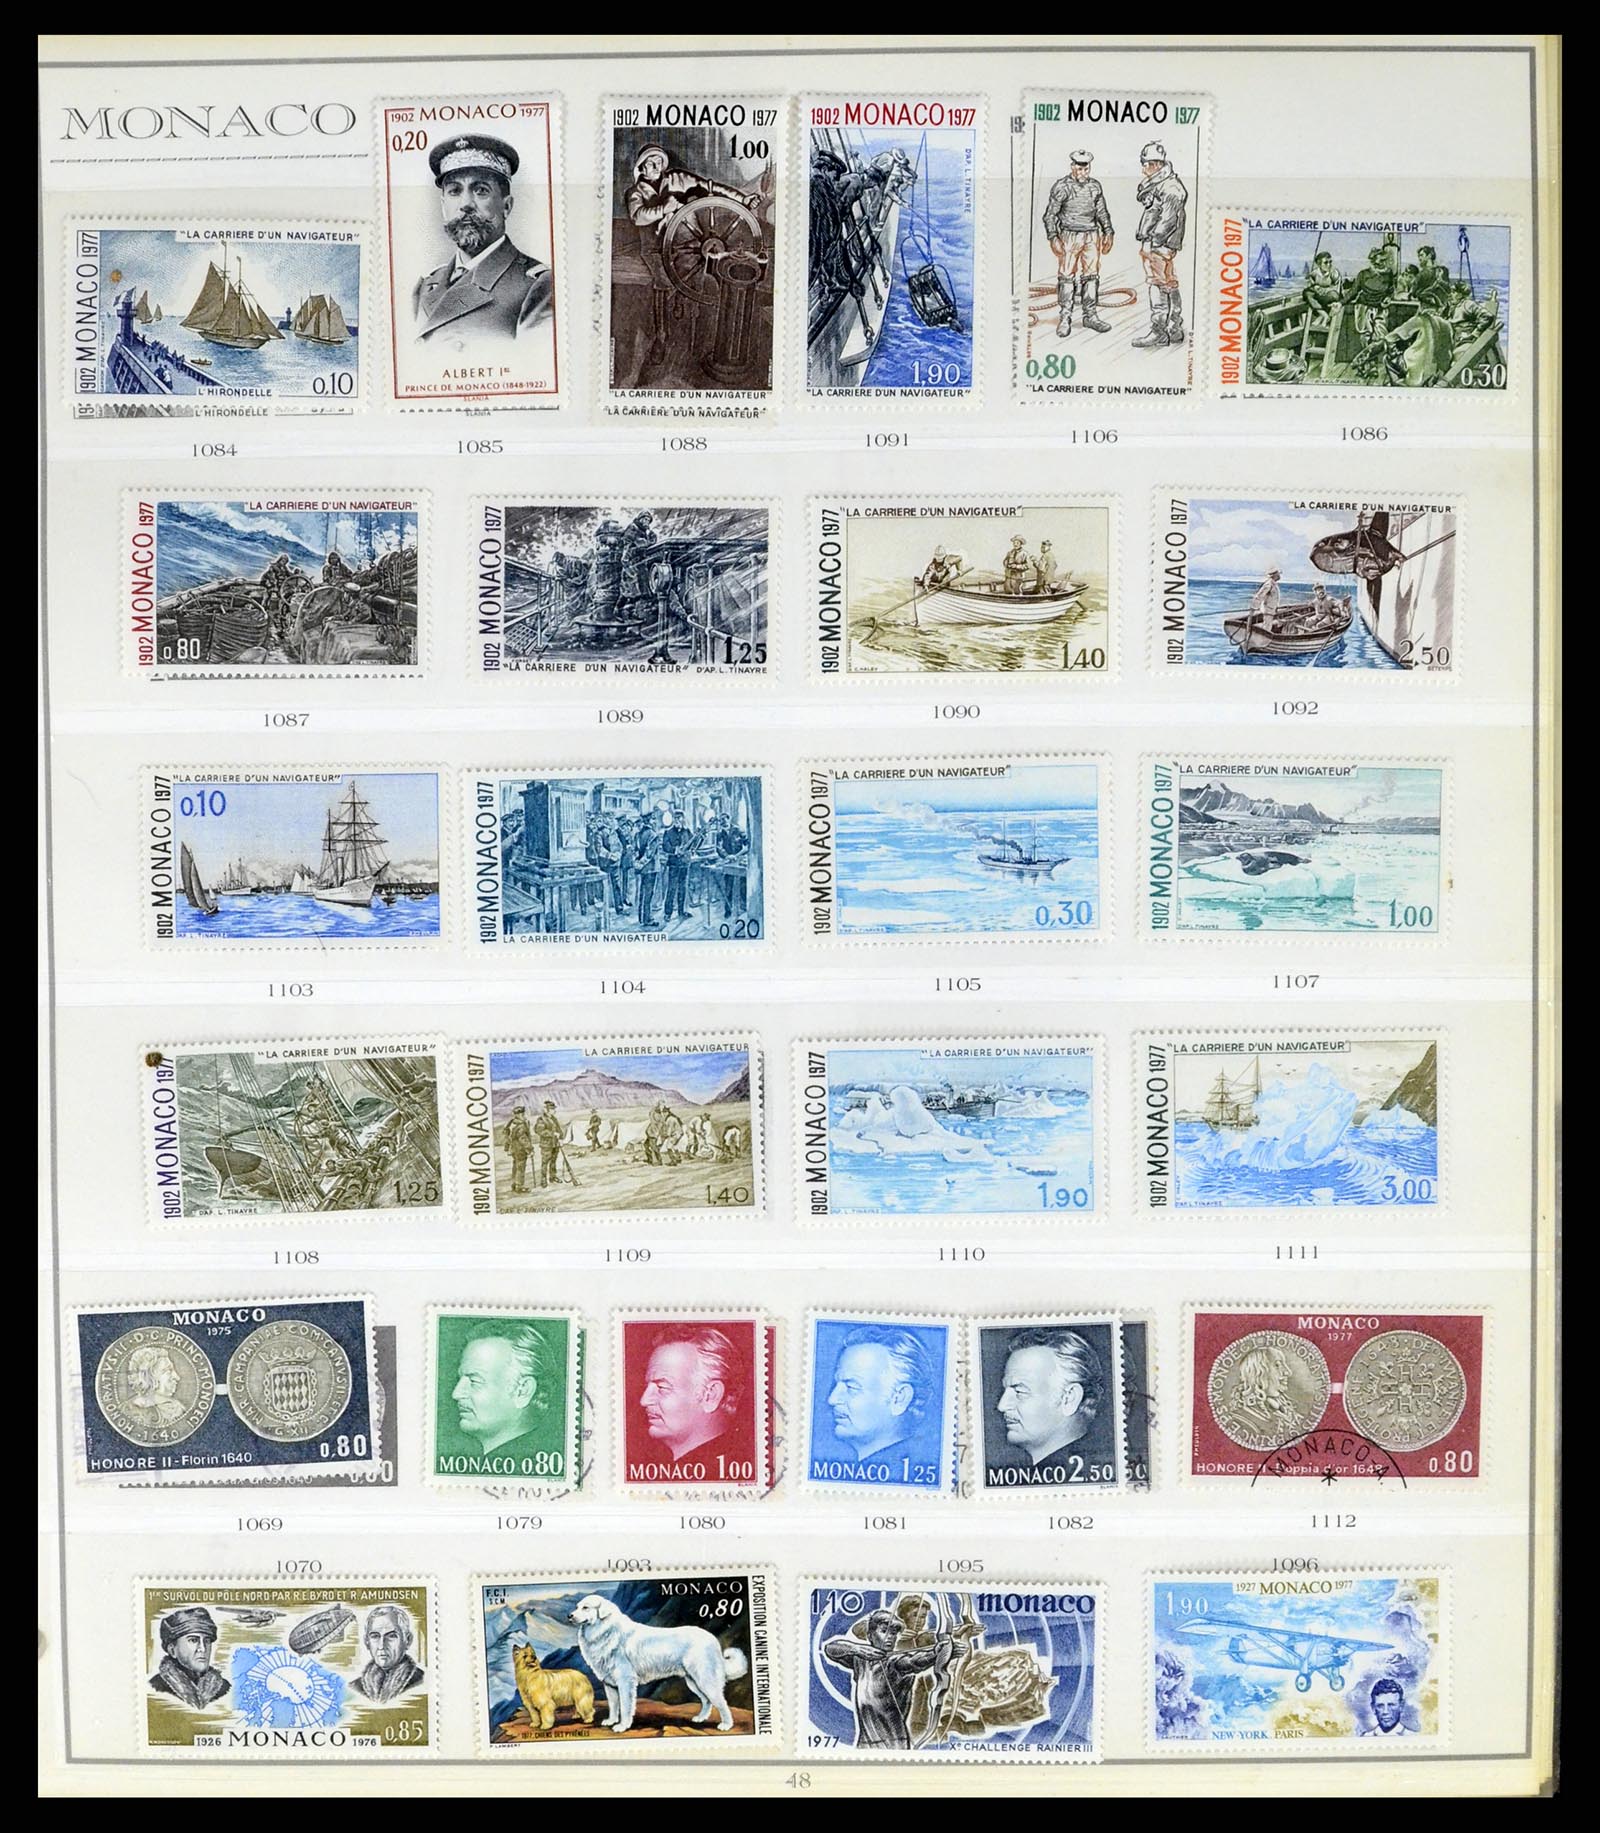 37437 093 - Stamp collection 37437 Monaco 1885-1996.